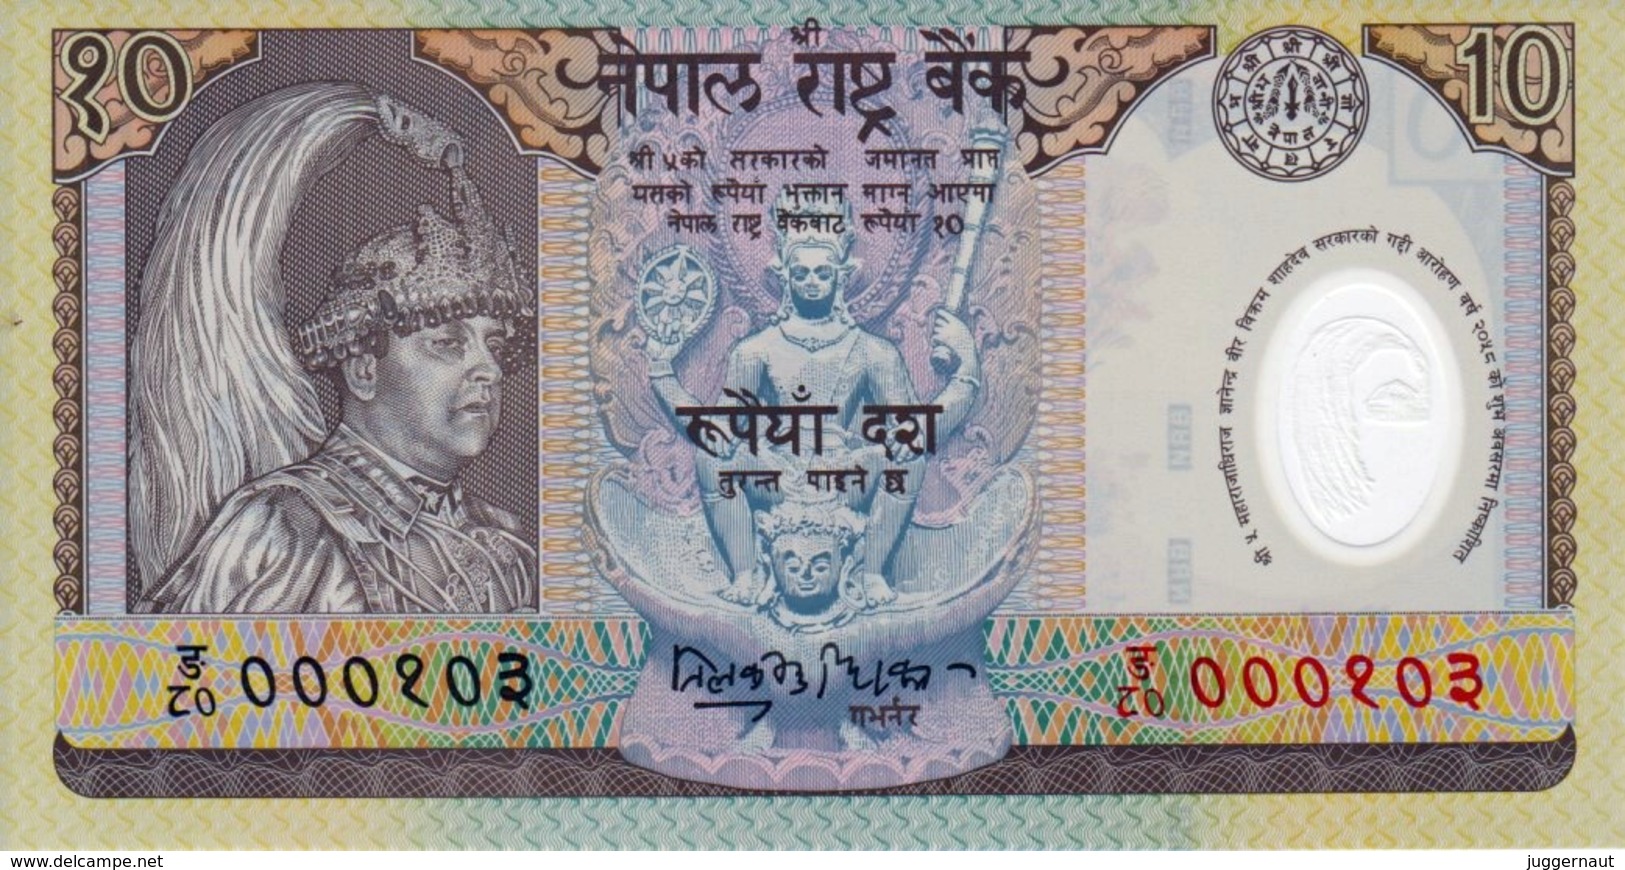 NEPAL 2002 Rupees-10 FANCY Polymer BANKNOTE Serial 103 Pick #45 UNC - Nepal